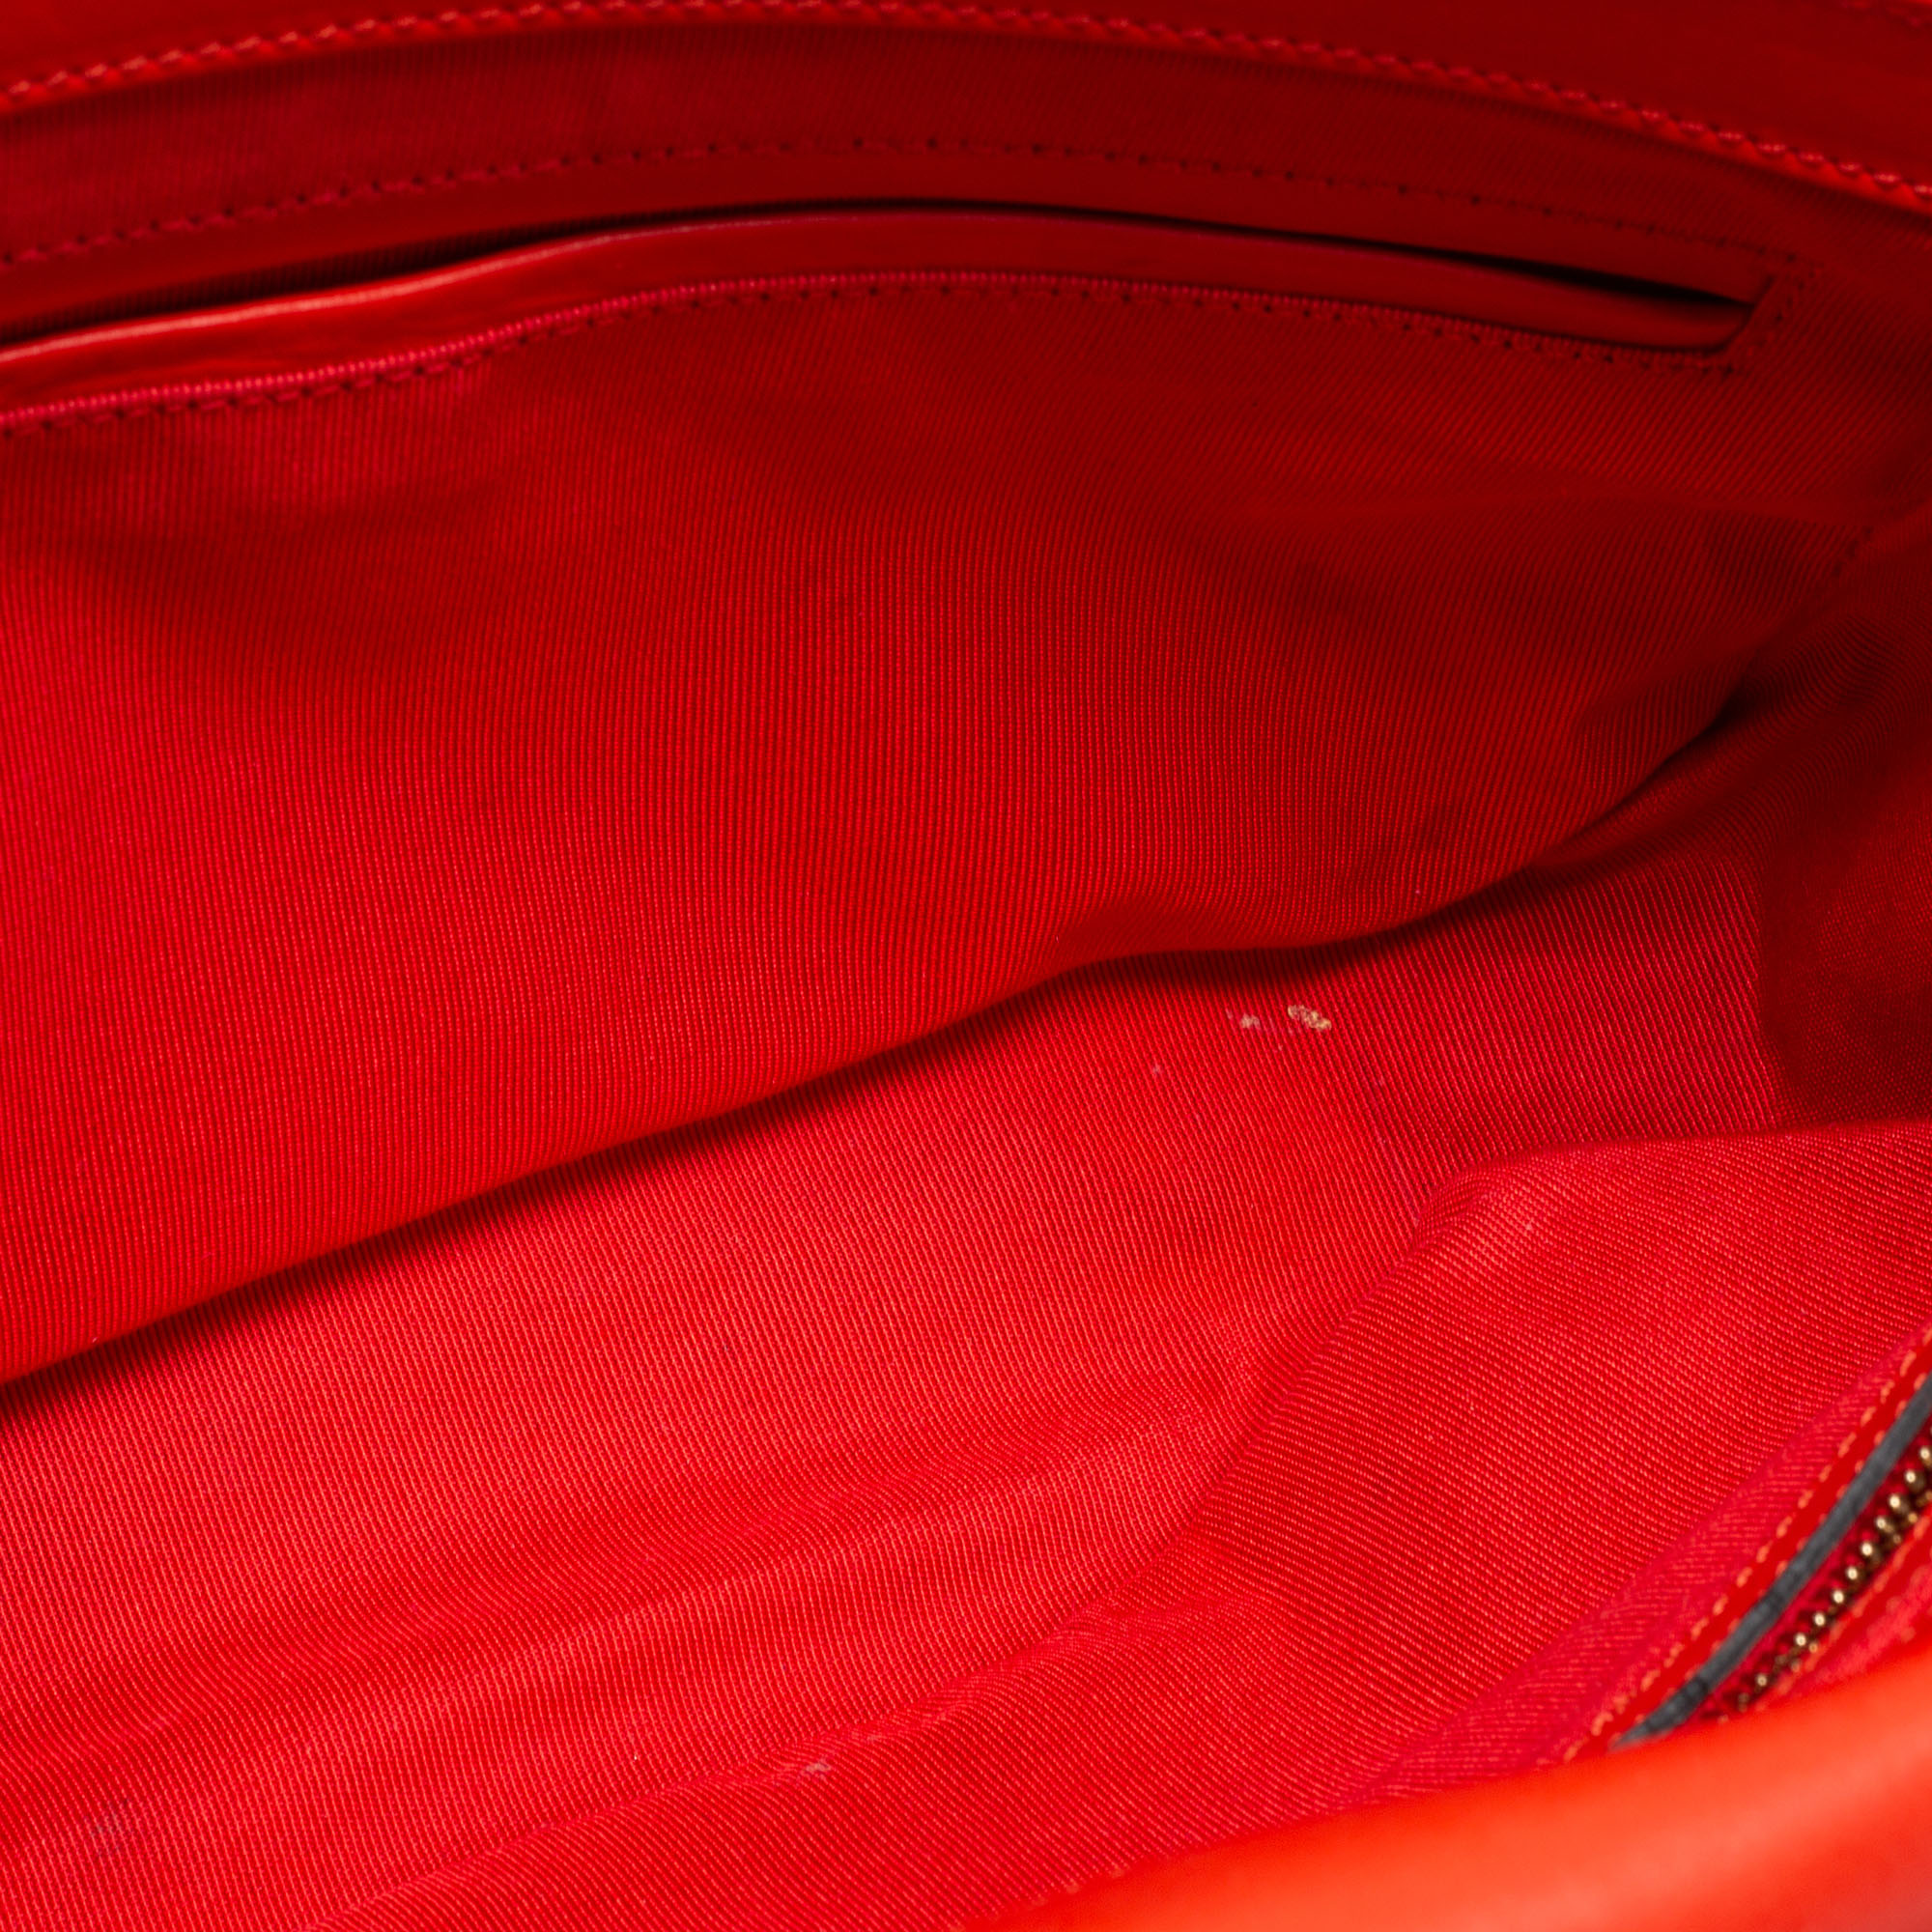 Christian Louboutin Orange/Grey Leather Sweet Charity Shoulder Bag